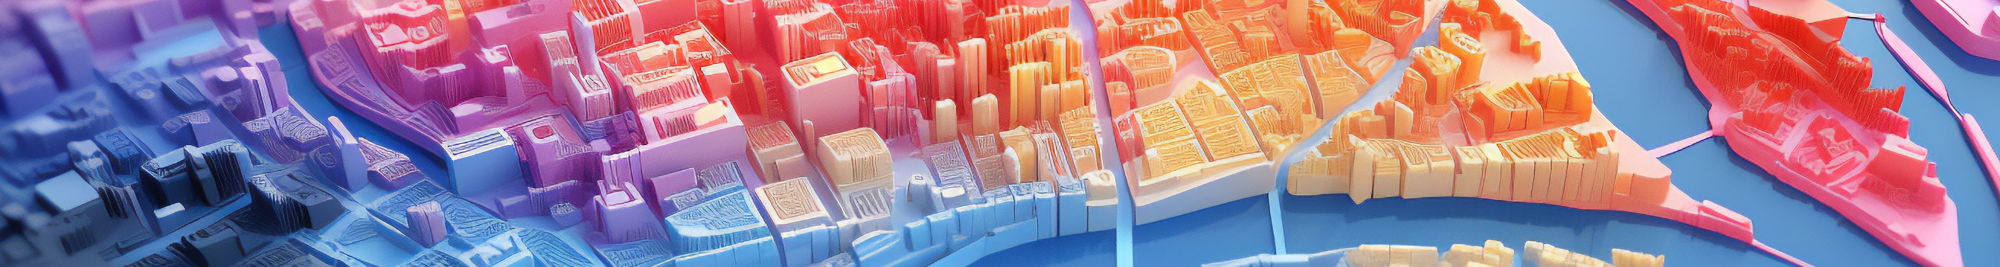 A computer coloured heatmap image of a city